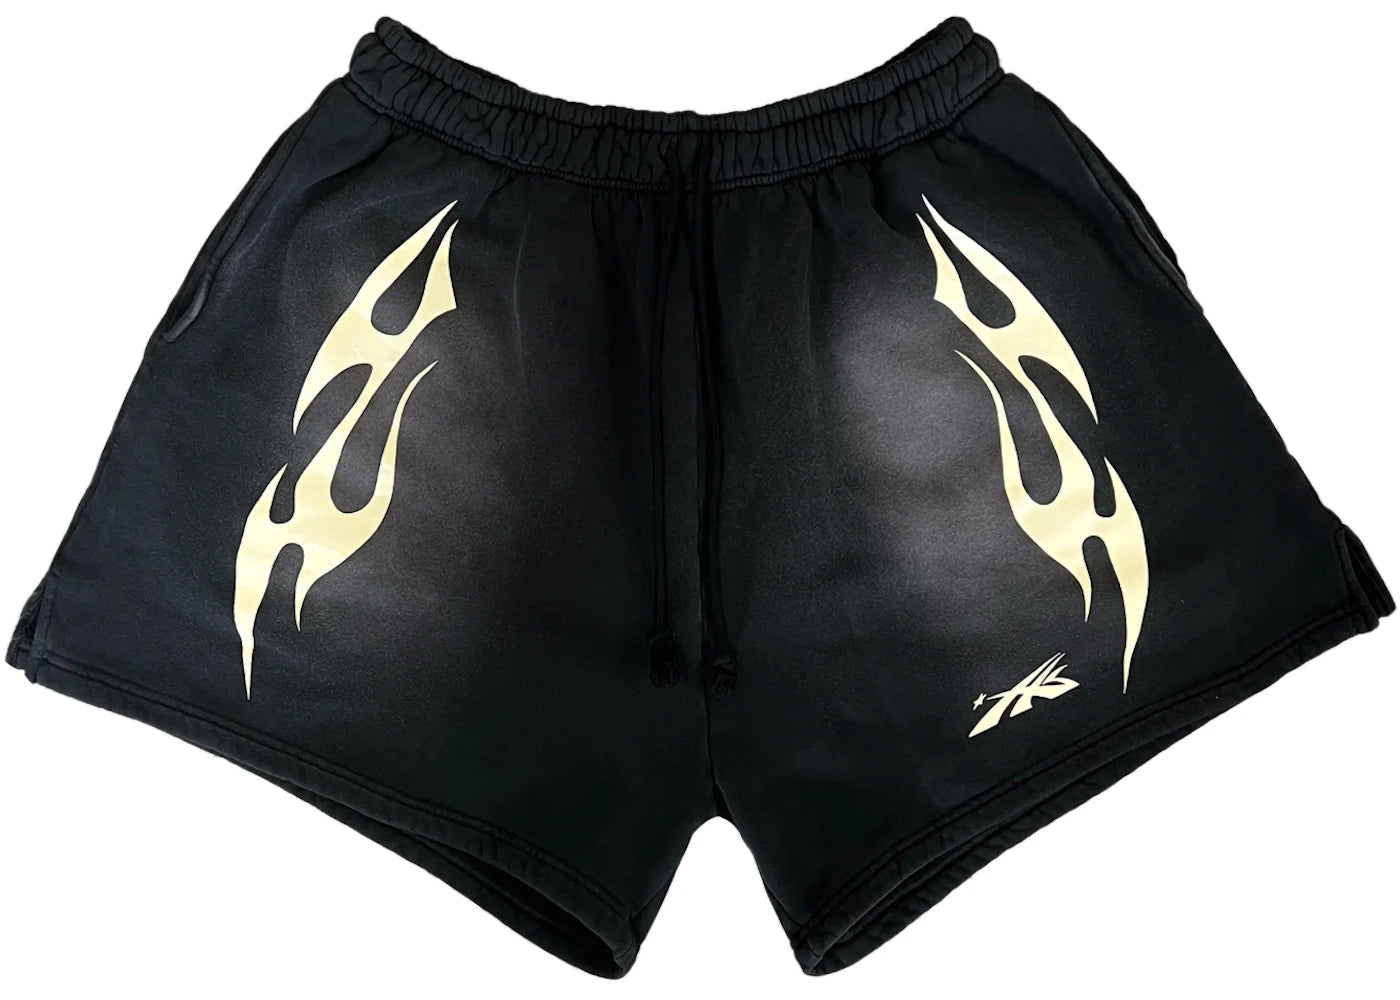 Hellstar Sports Flame Shorts Black